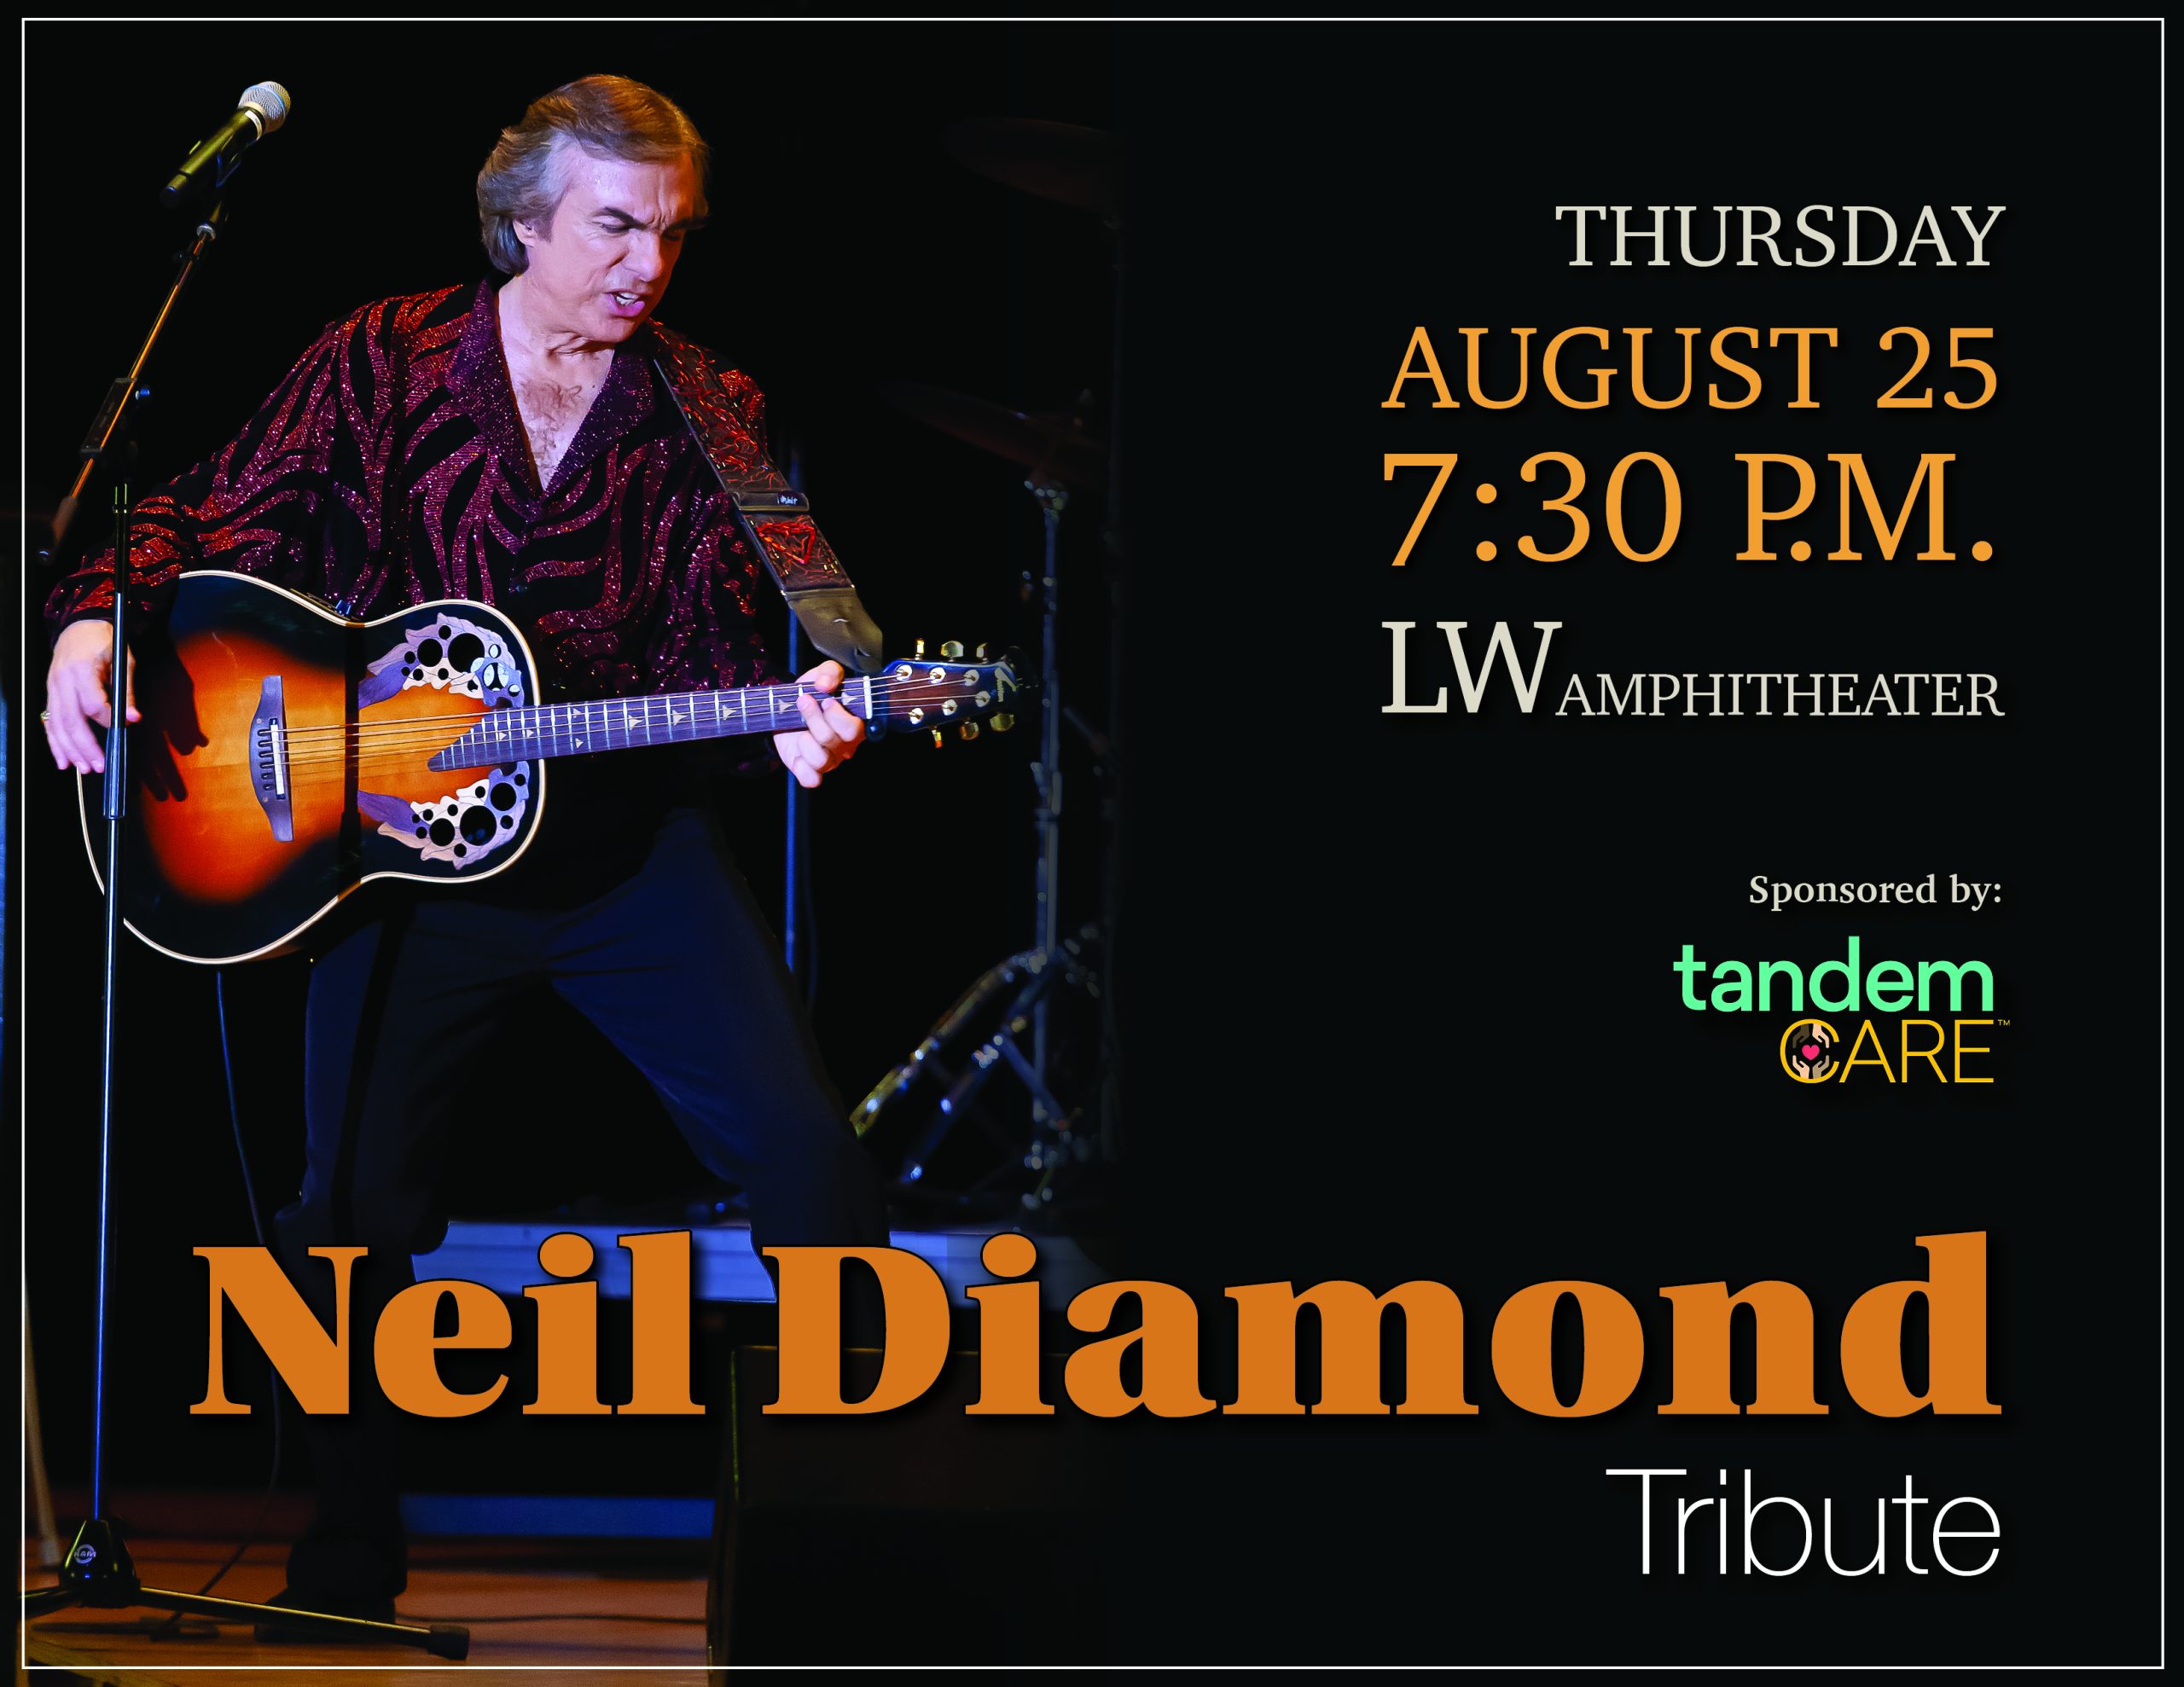 Updated Neil Diamond flyer 08-25